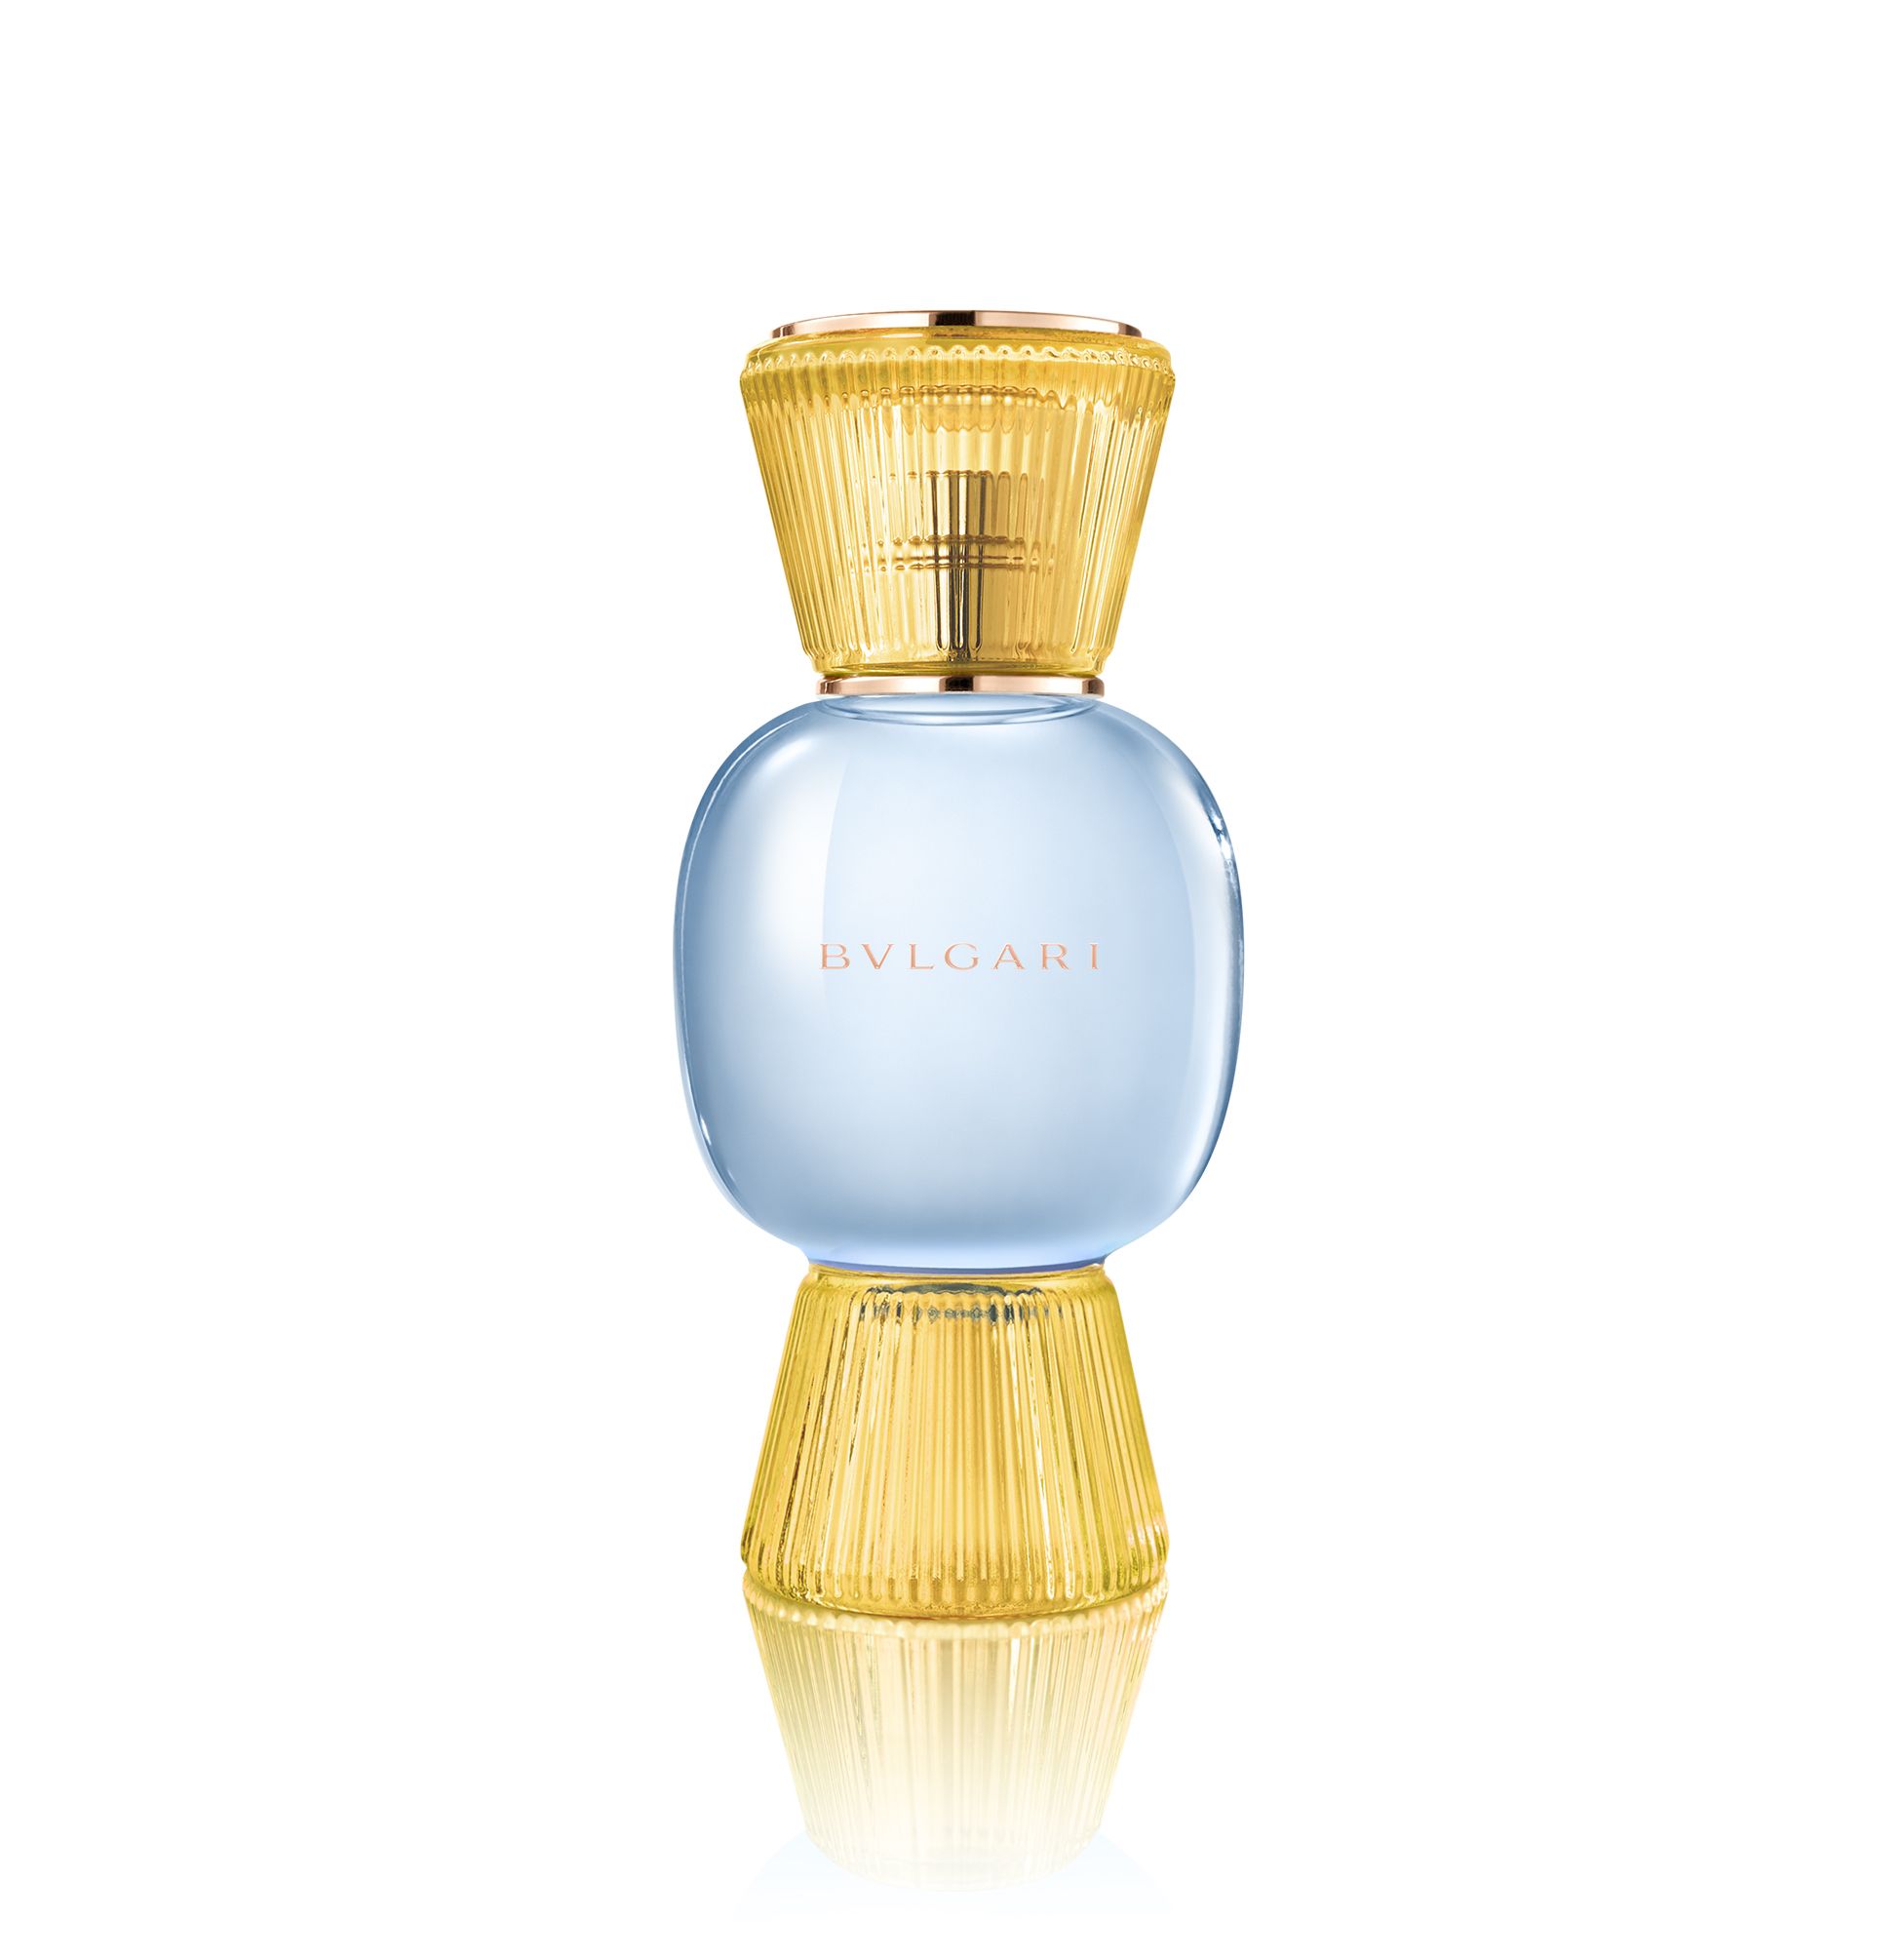 Riva Solare Bvlgari perfume - a new fragrance for women 2021